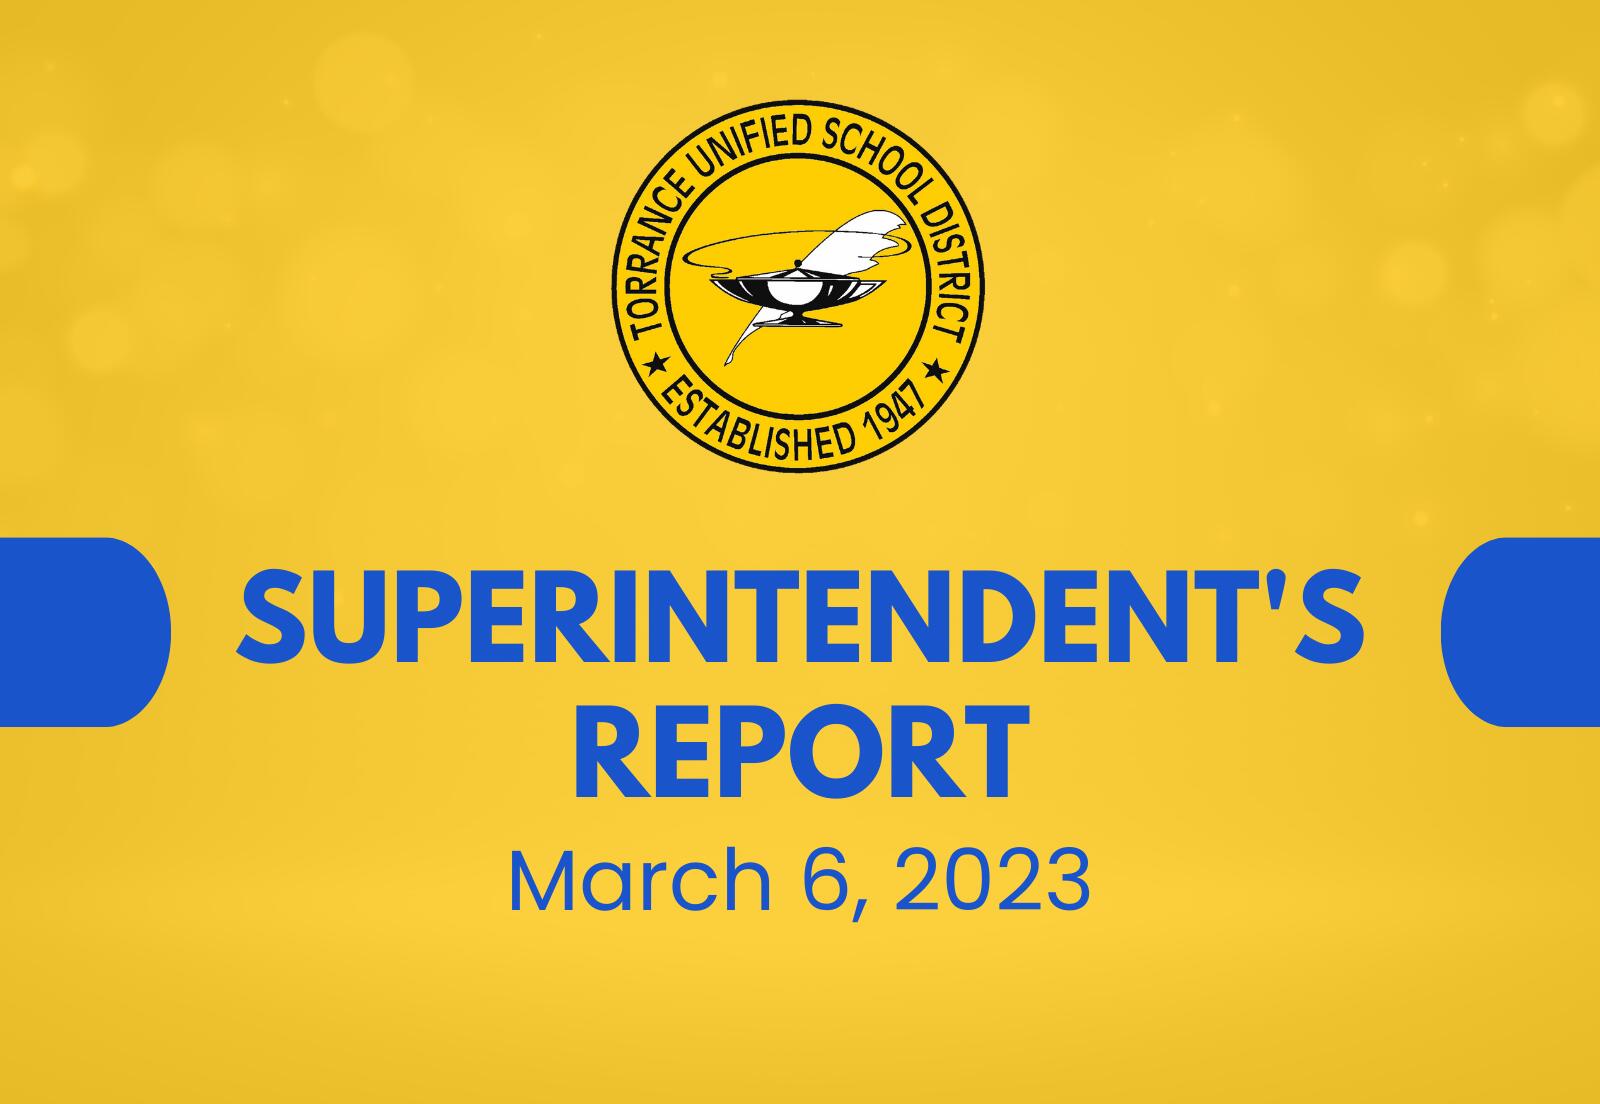 Superintendent's Report Mar. 6, 2023